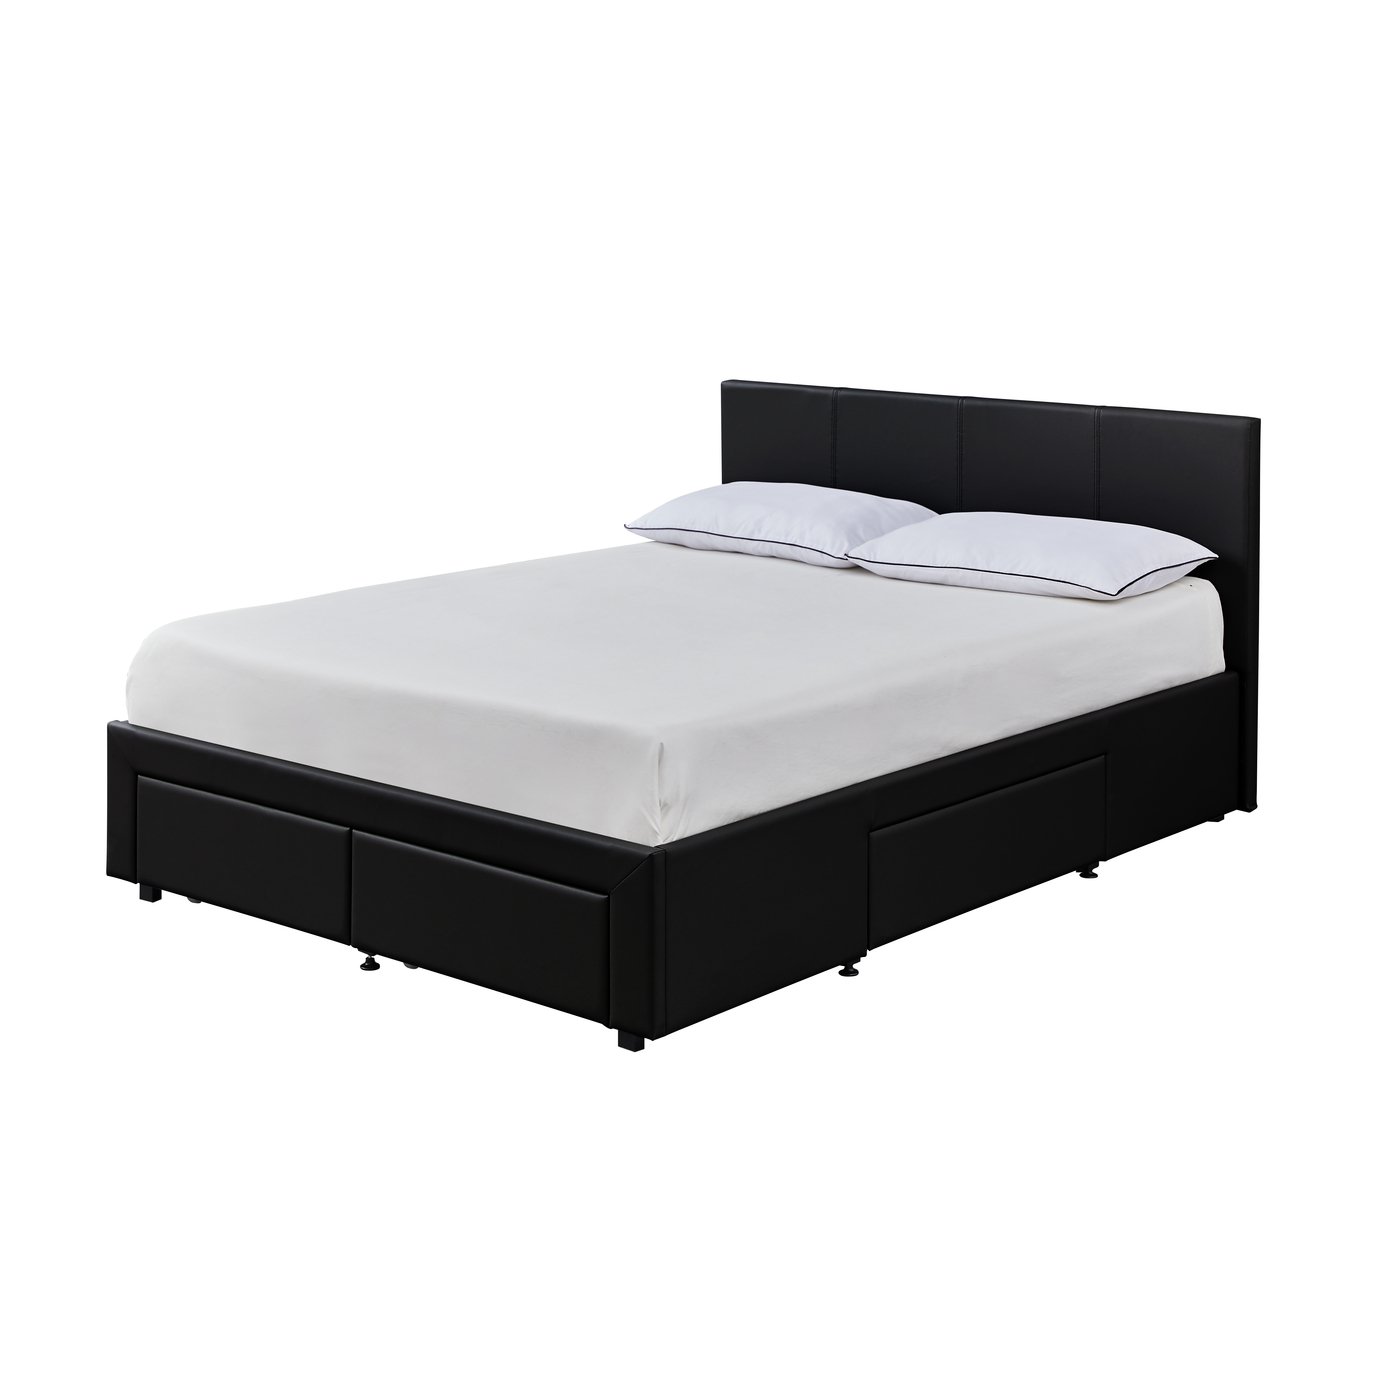 Argos Home Lavendon 4 Drawer Double Bed Frame - Black